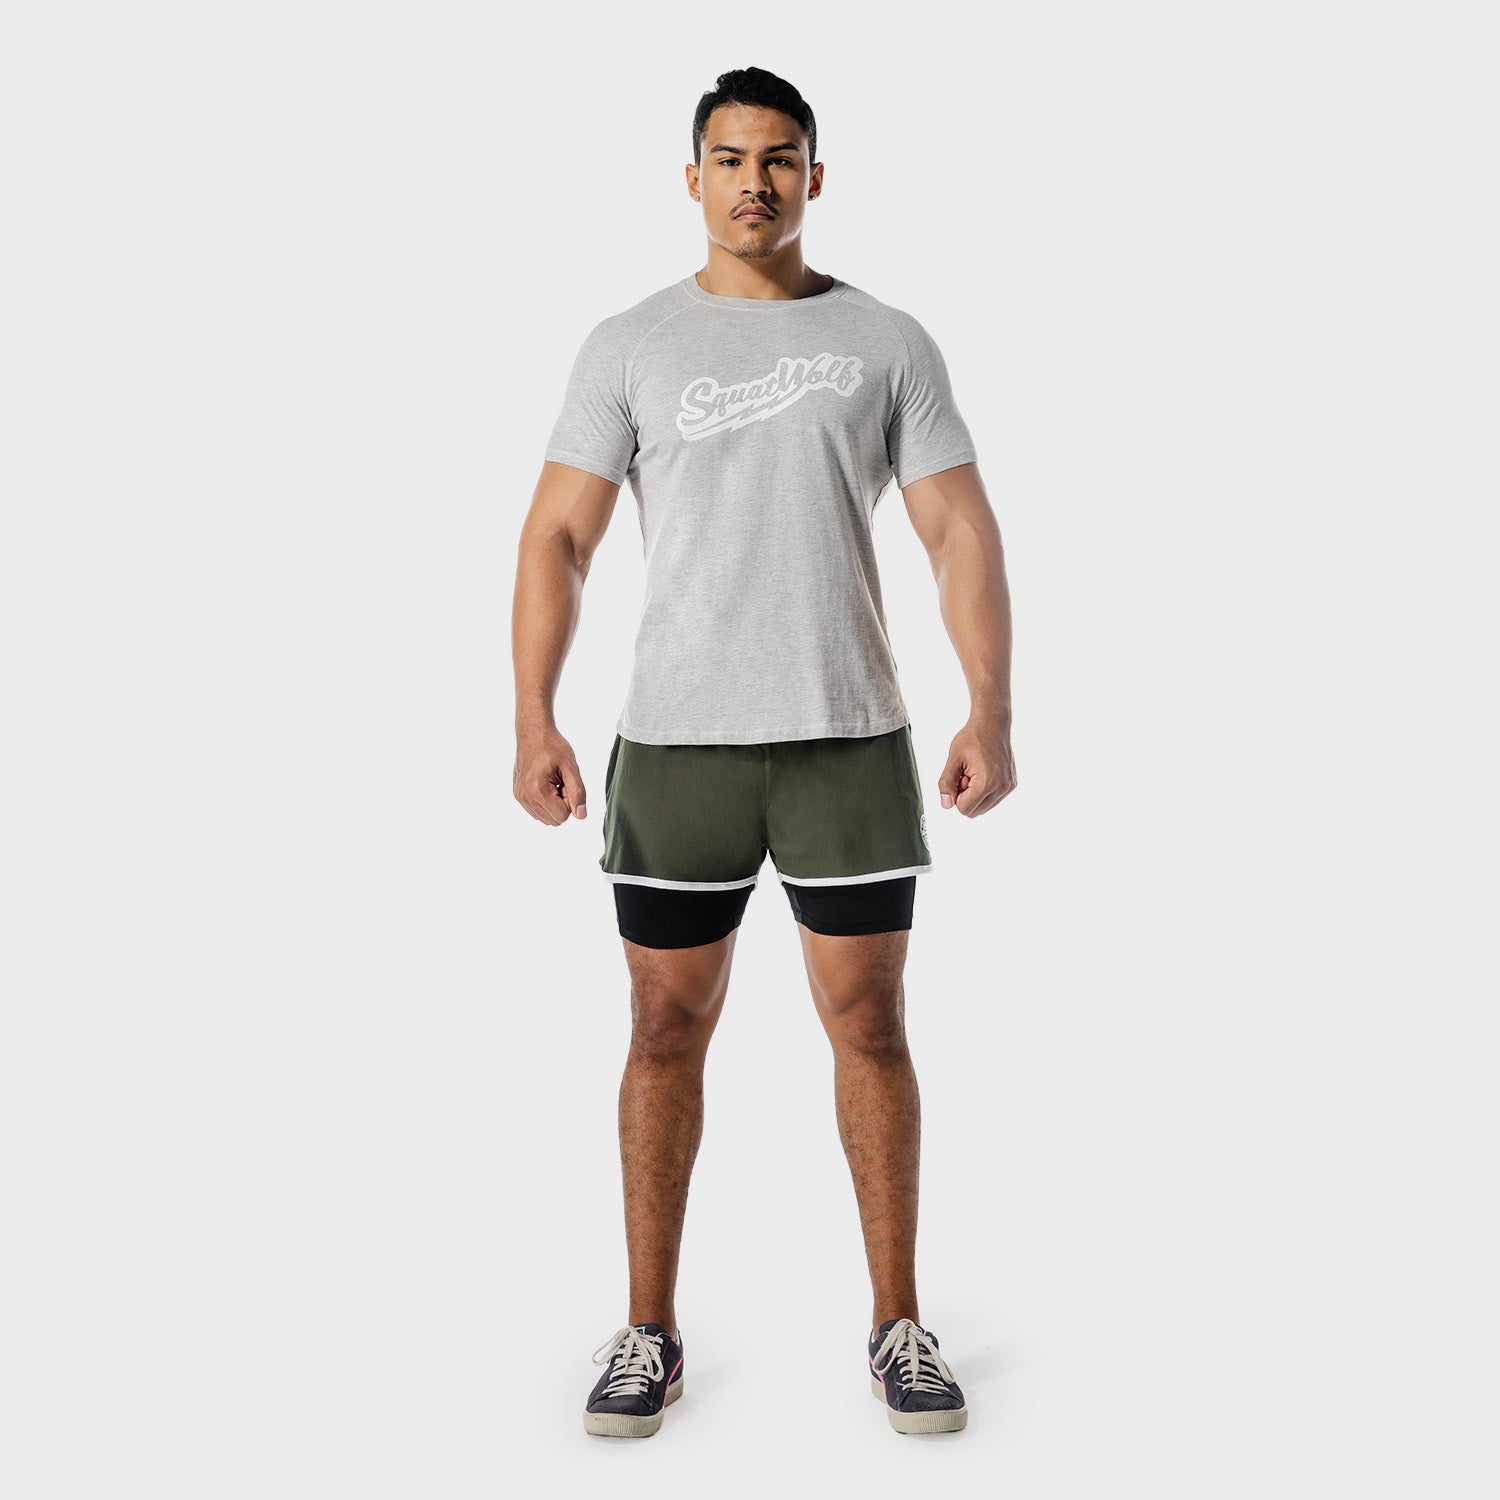 squatwolf-gym-t-shirts-golden-era-one-up-t-shirt-light-grey-marl-workout-clothes-for-men